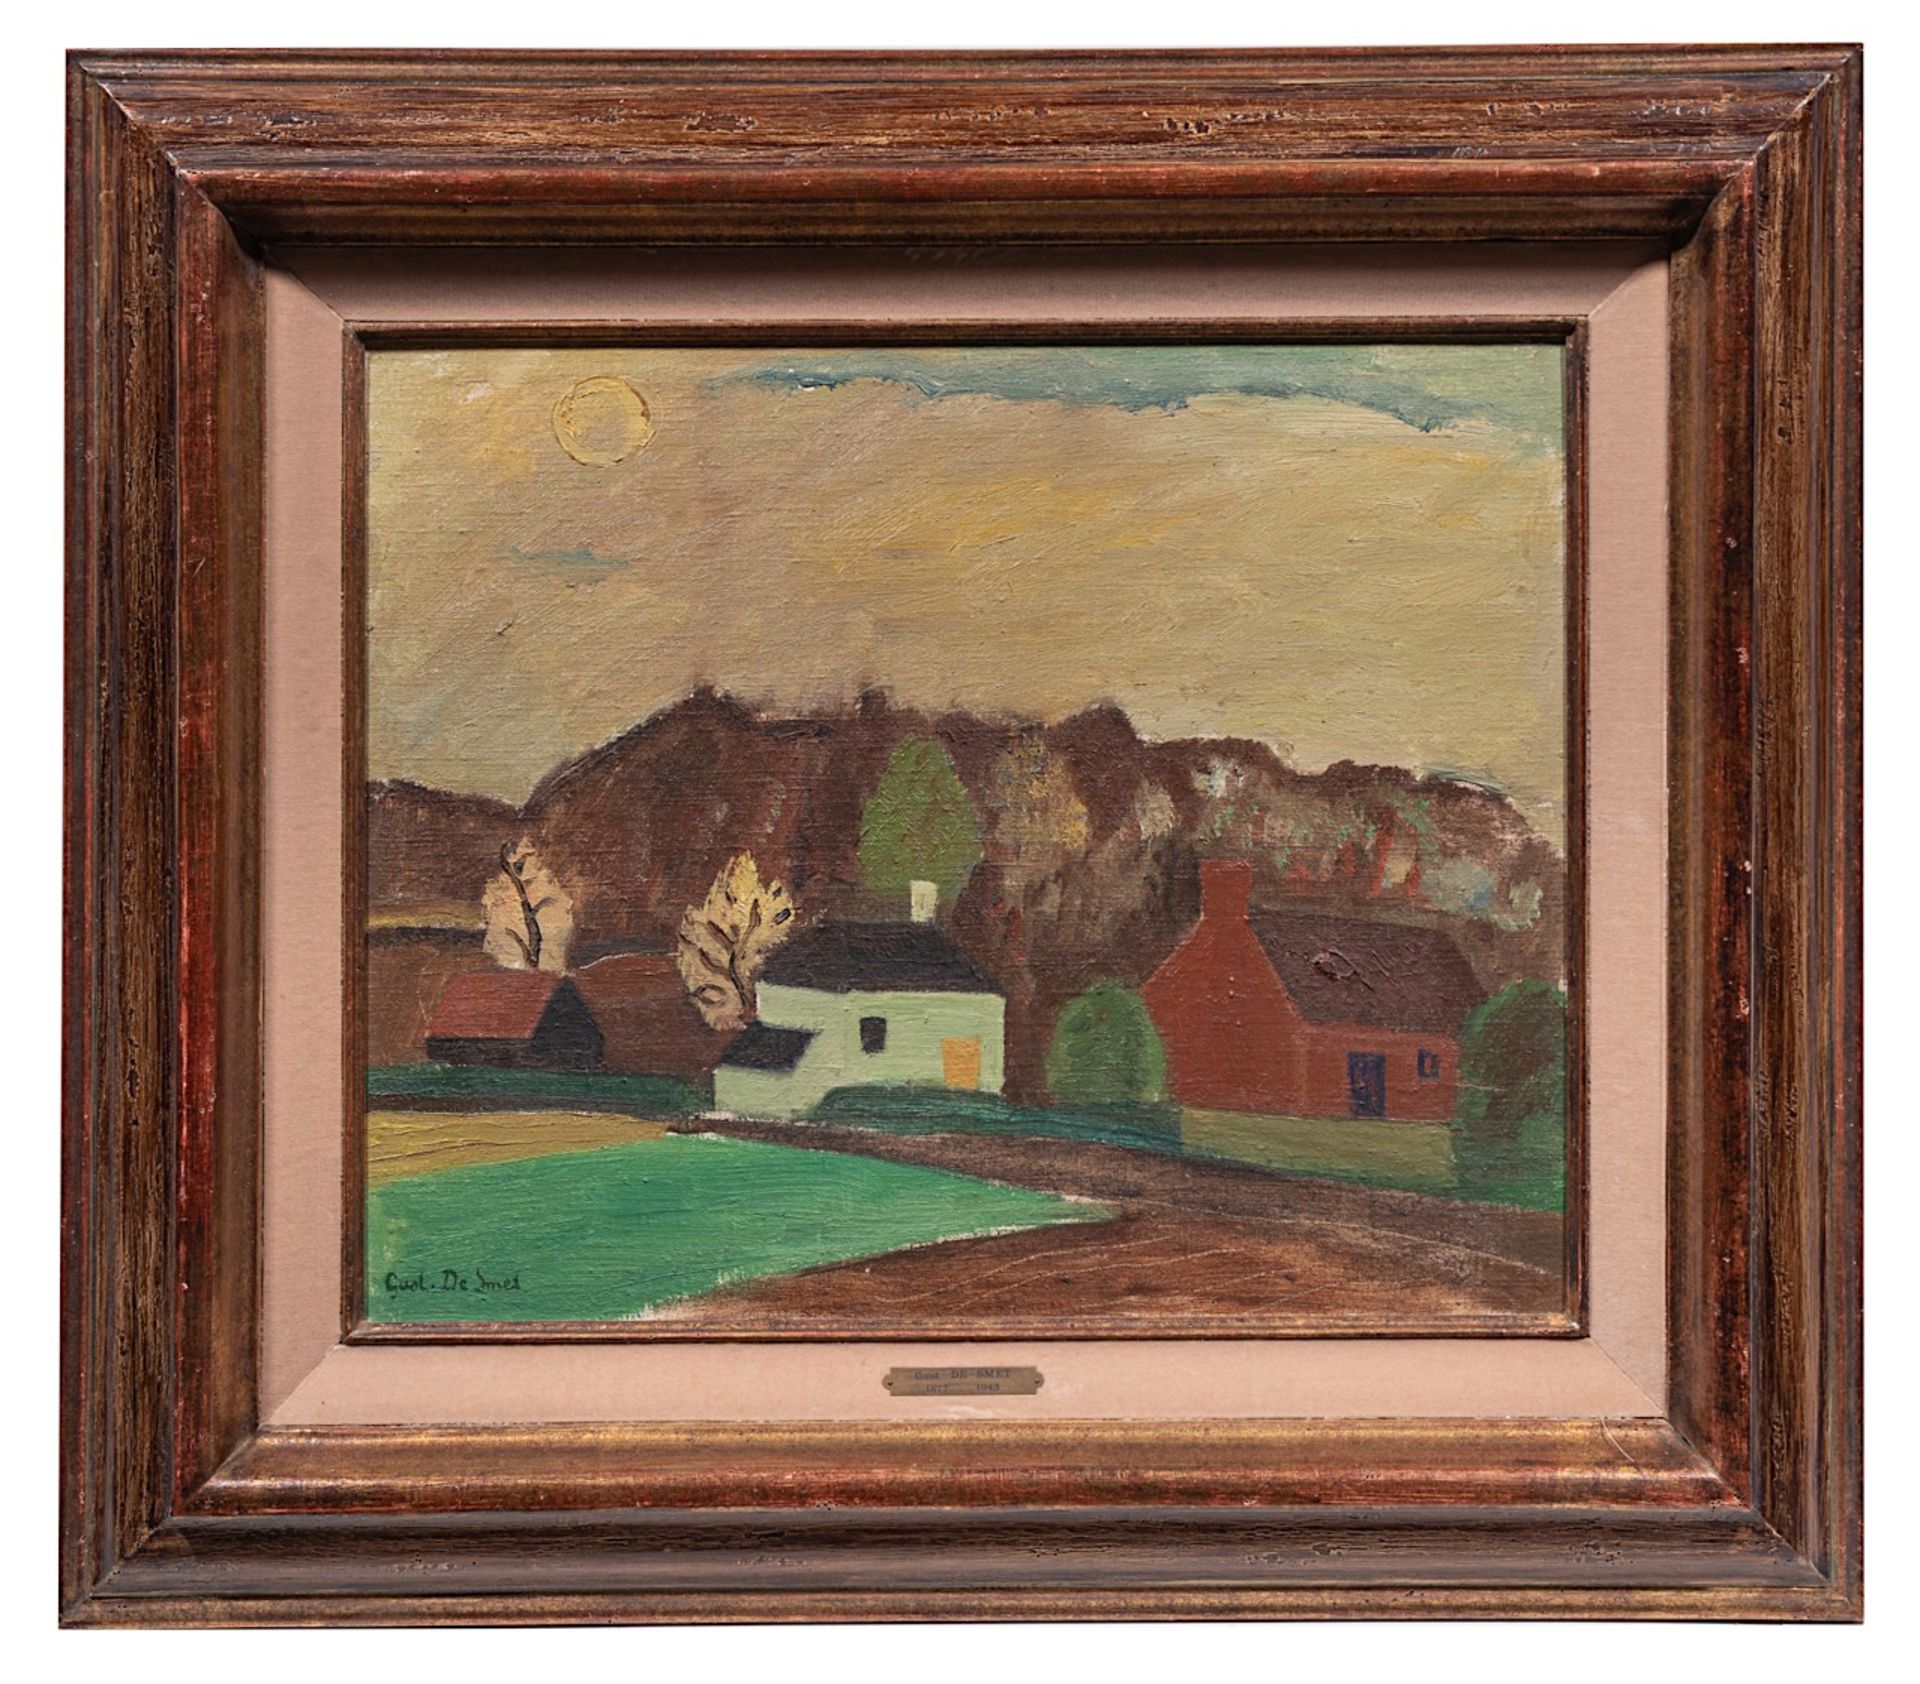 Gustave De Smet (1877-1943), 'Het Witte Huis', 1935, oil on canvas on panel 48 x 58 cm. (18.9 x 22.8 - Image 2 of 7